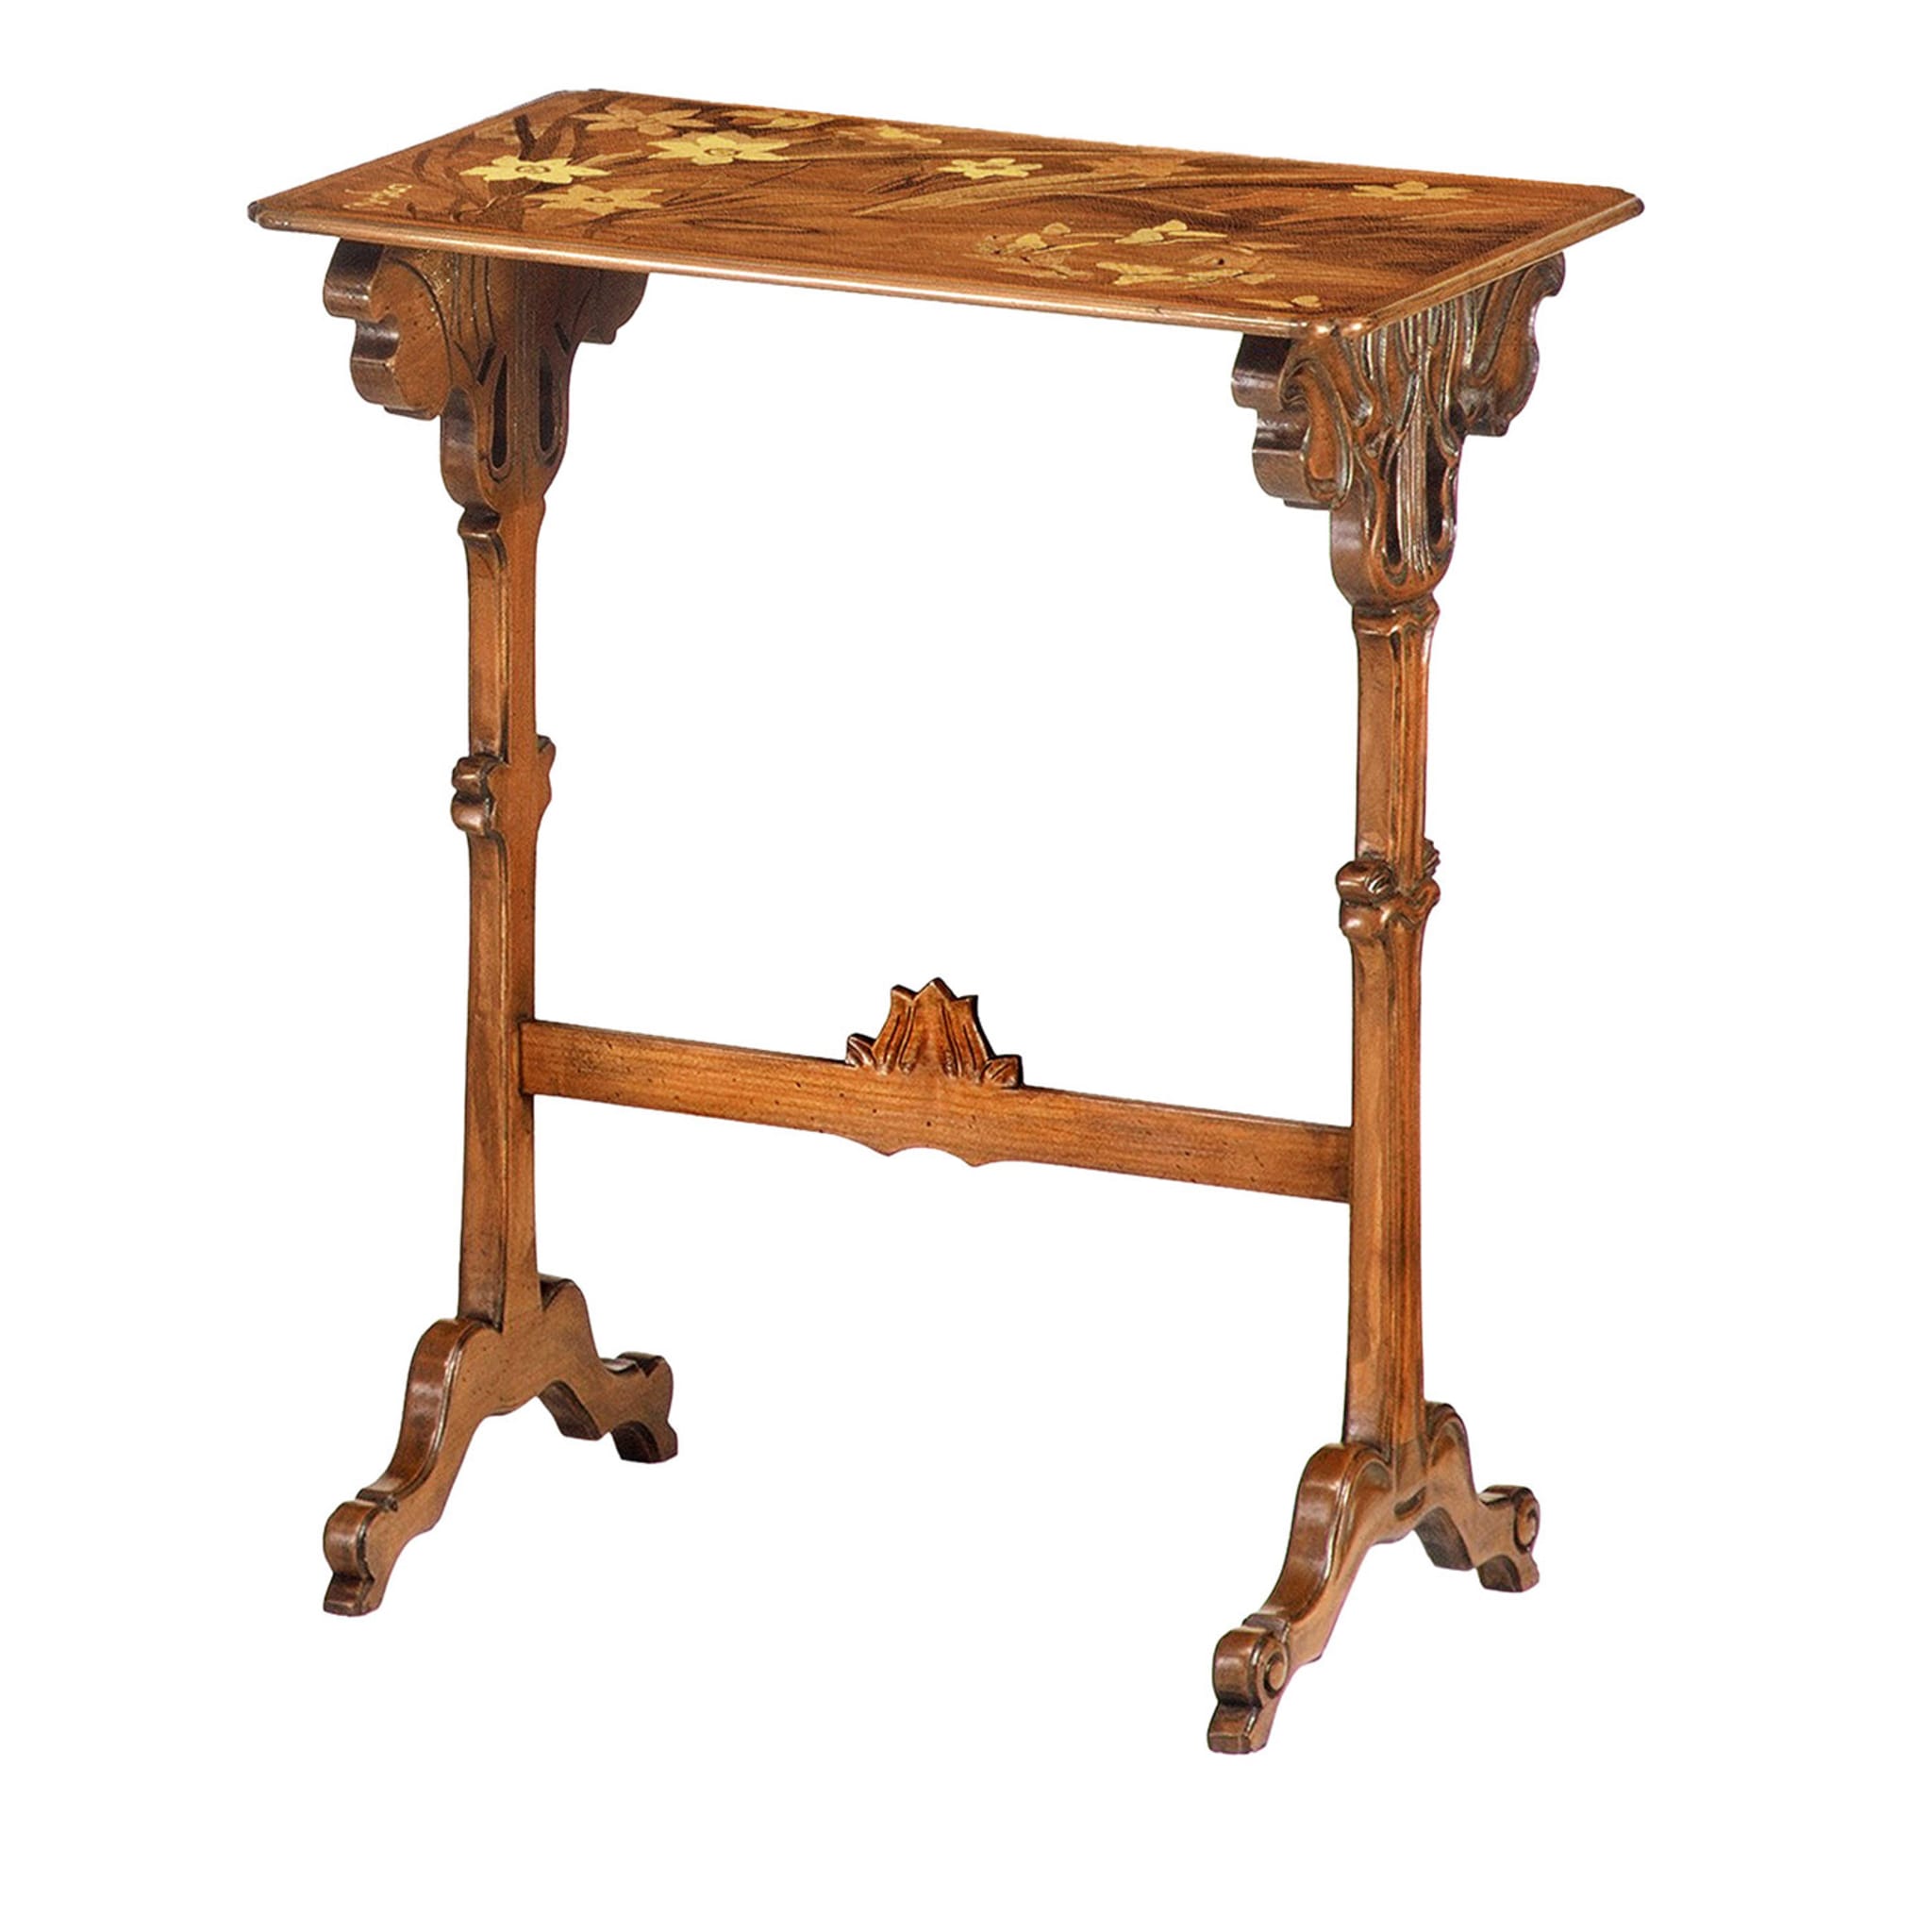 French Art Nouveau-Style Side Table by Emile Gallè #1 - Main view